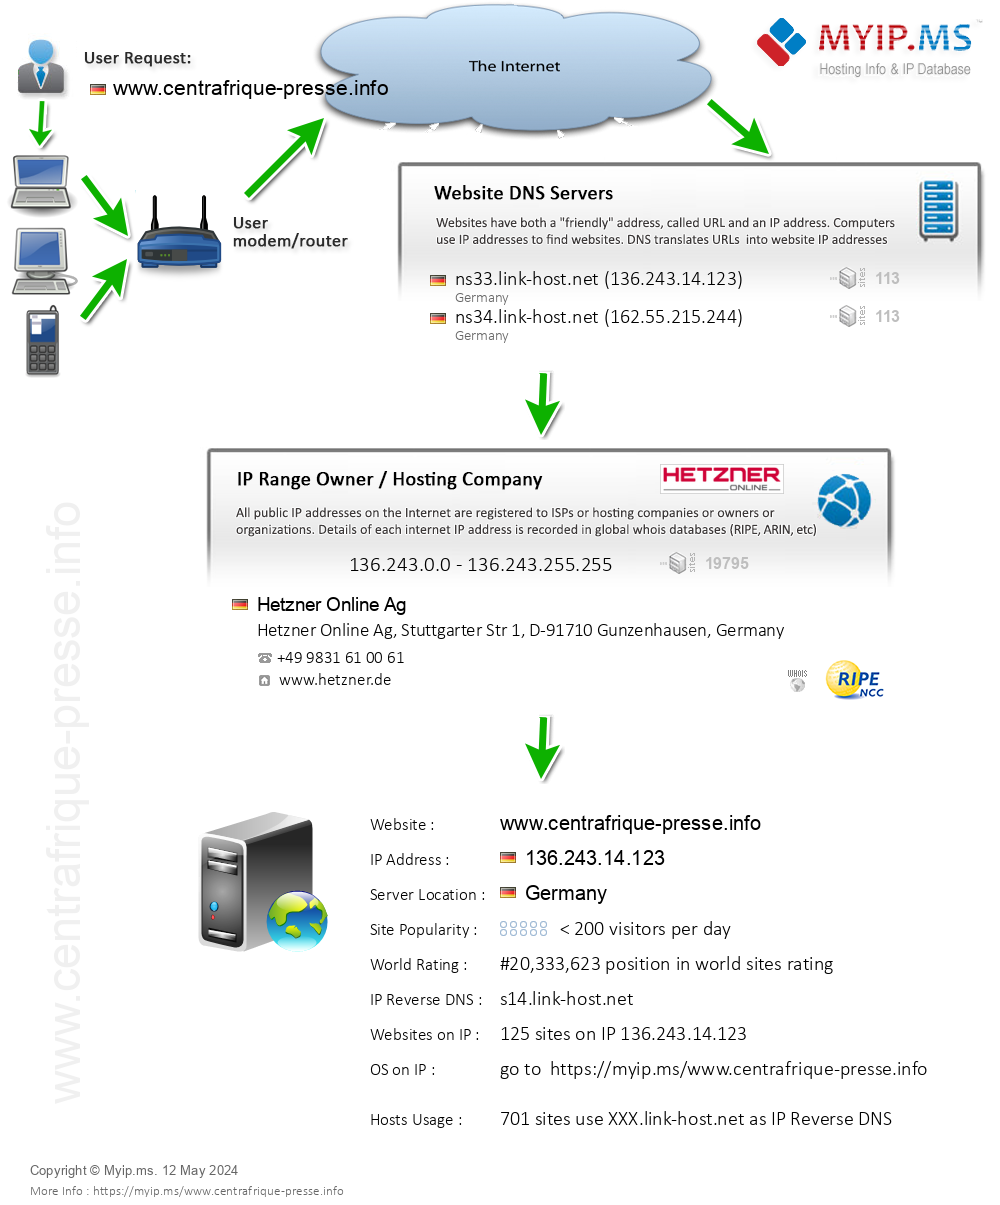 Centrafrique-presse.info - Website Hosting Visual IP Diagram